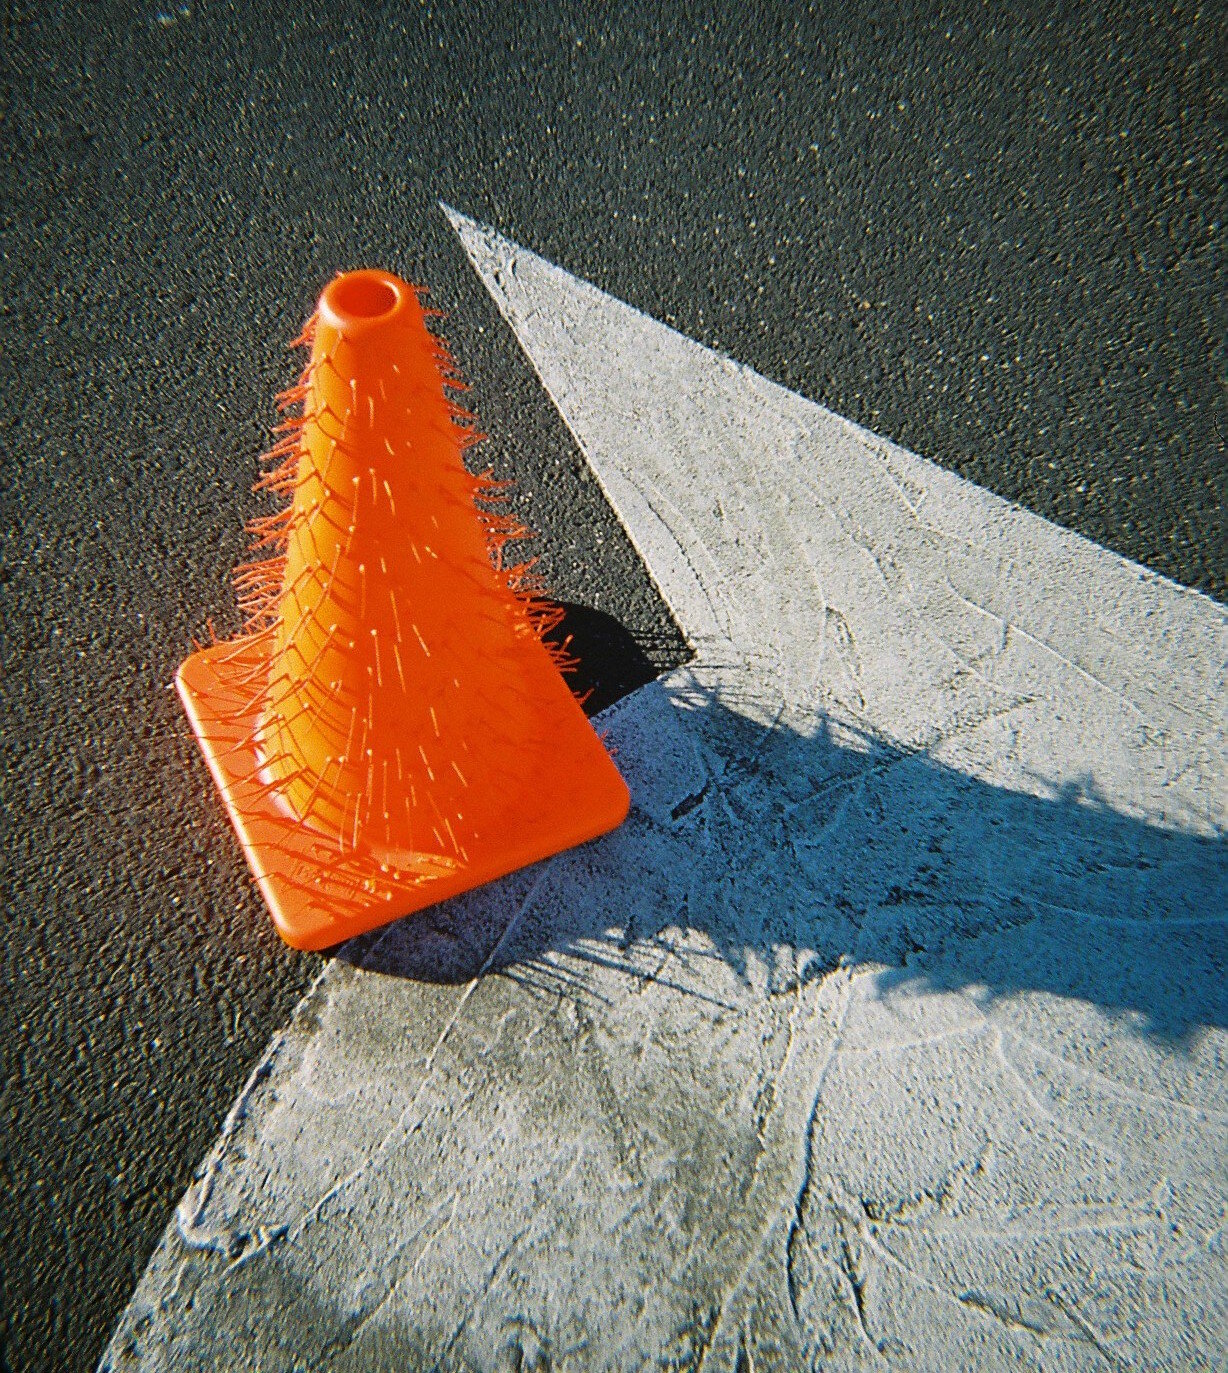  ‘Traffic Cone - Soft Edges’, Melbourne, 2021 